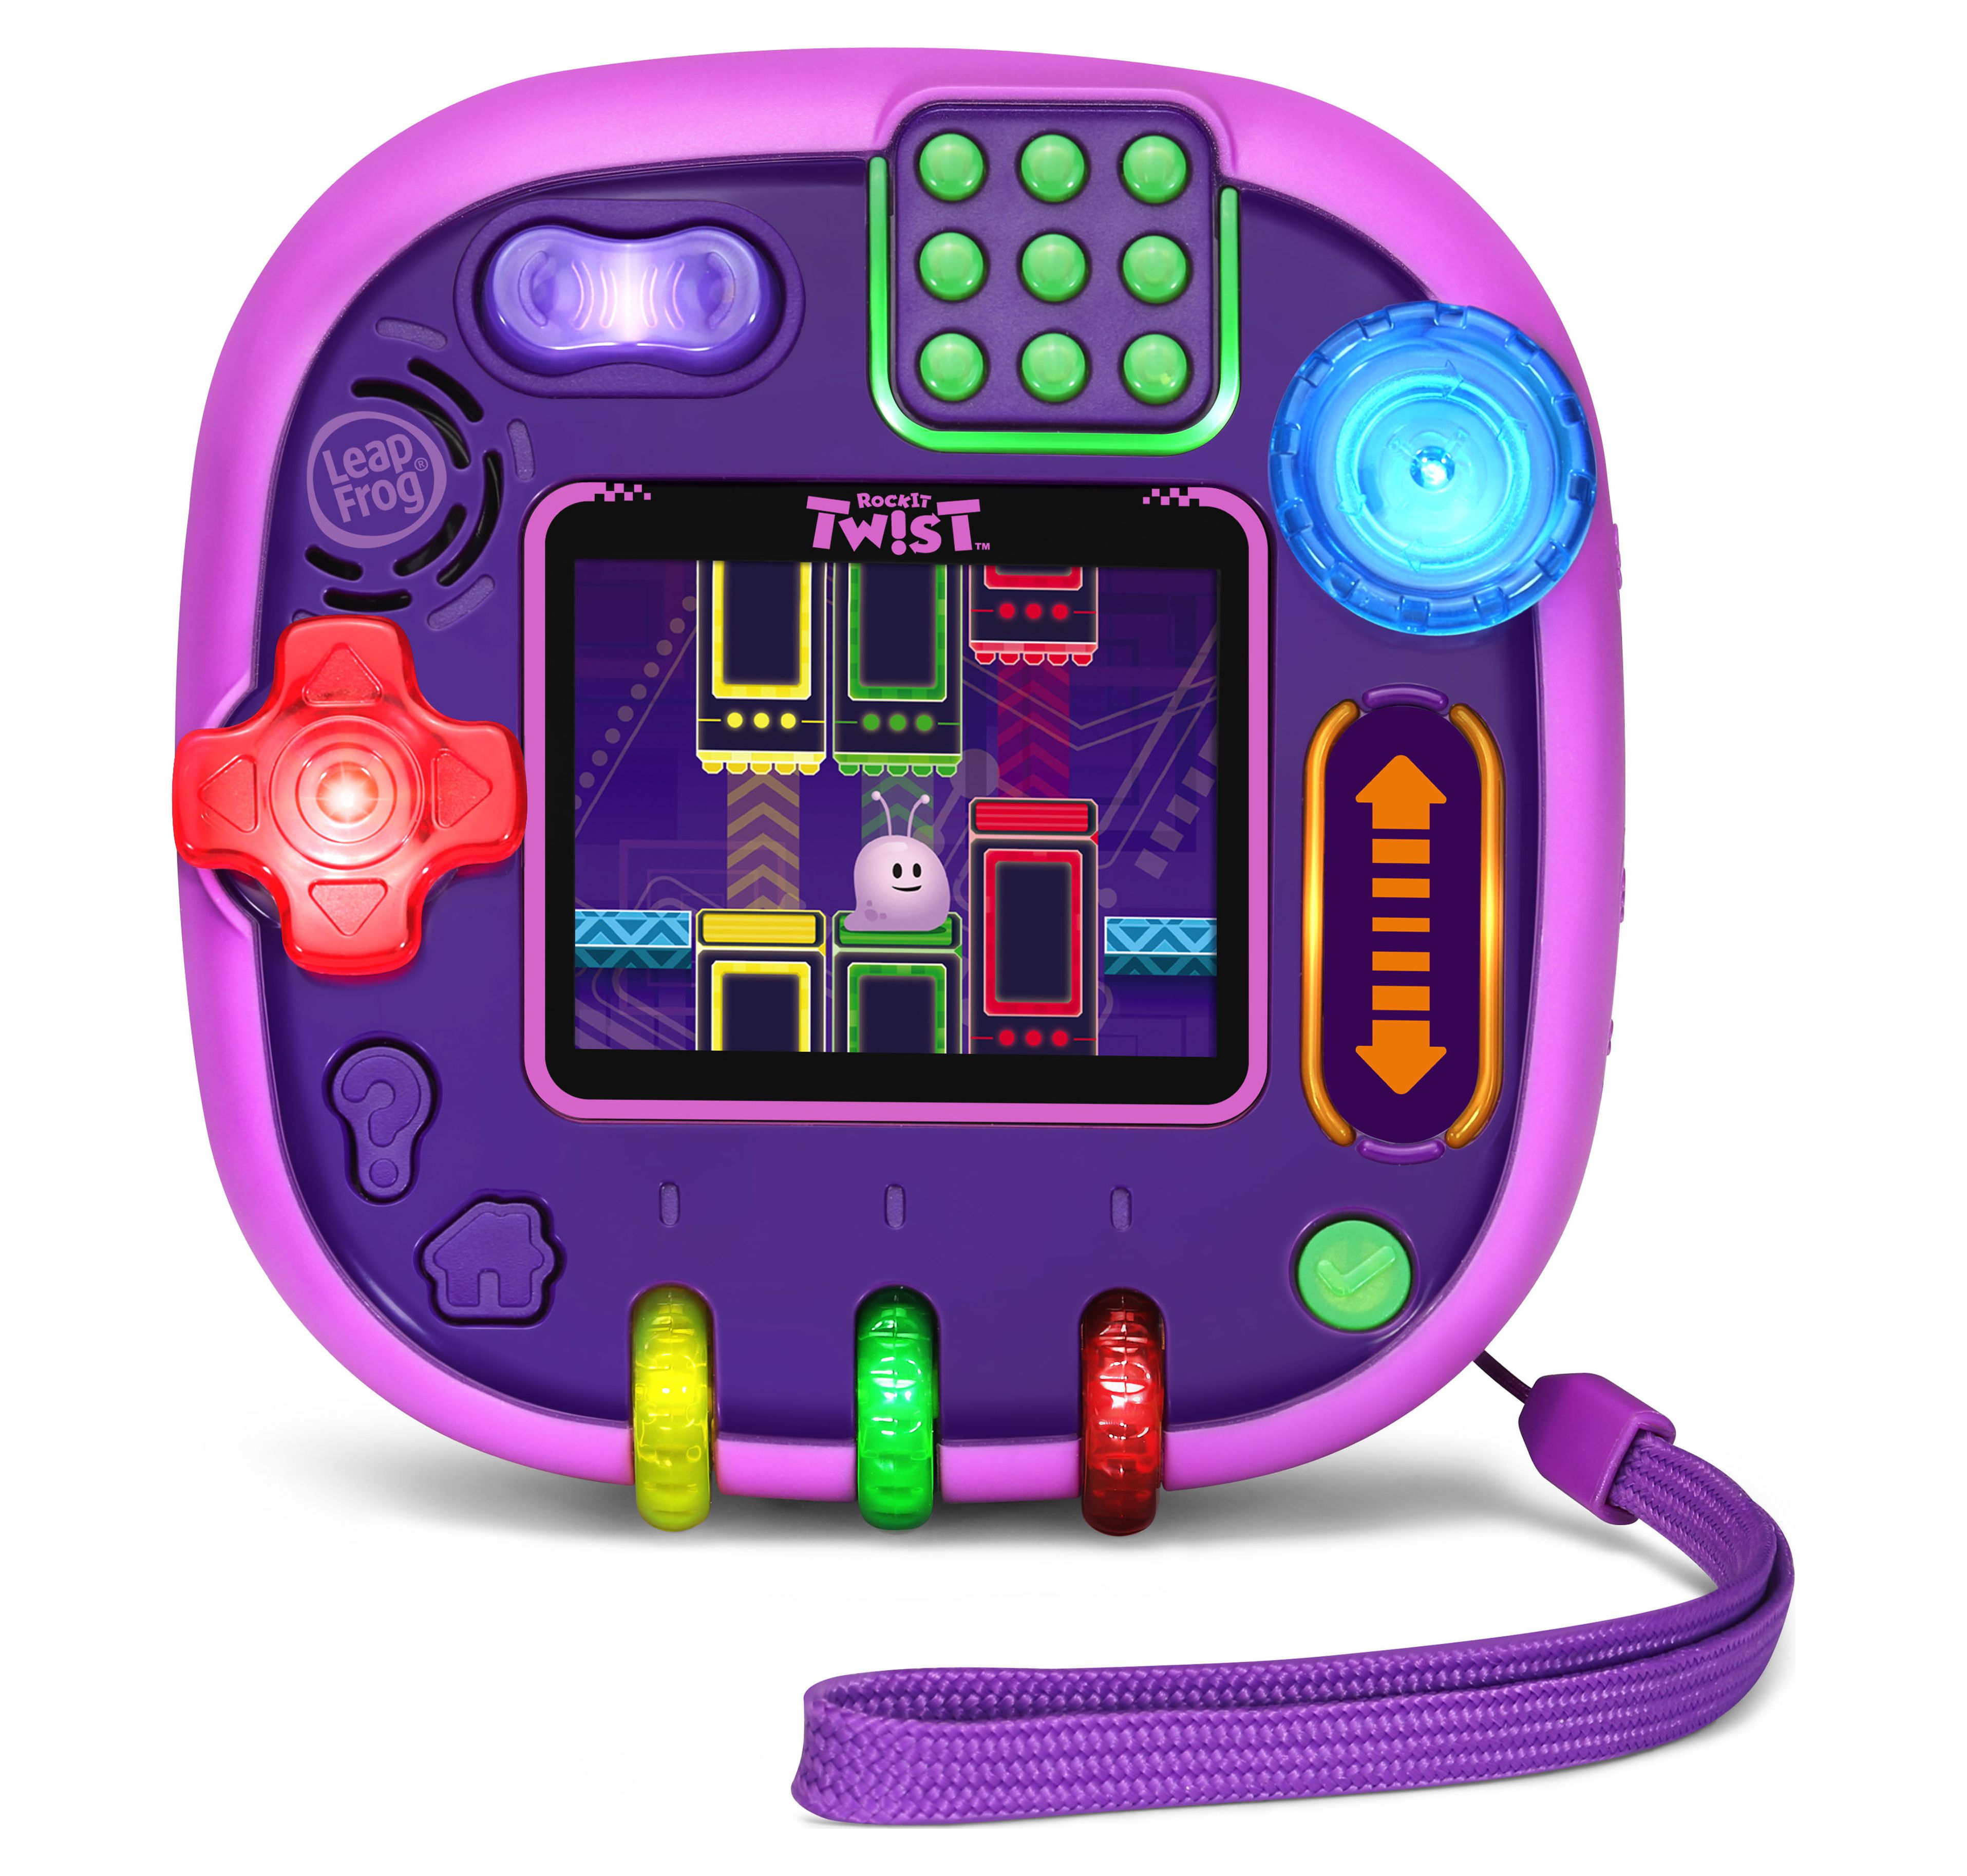 LeapFrog RockIt Twist Handheld Learning Game System, Purple - image 5 of 18